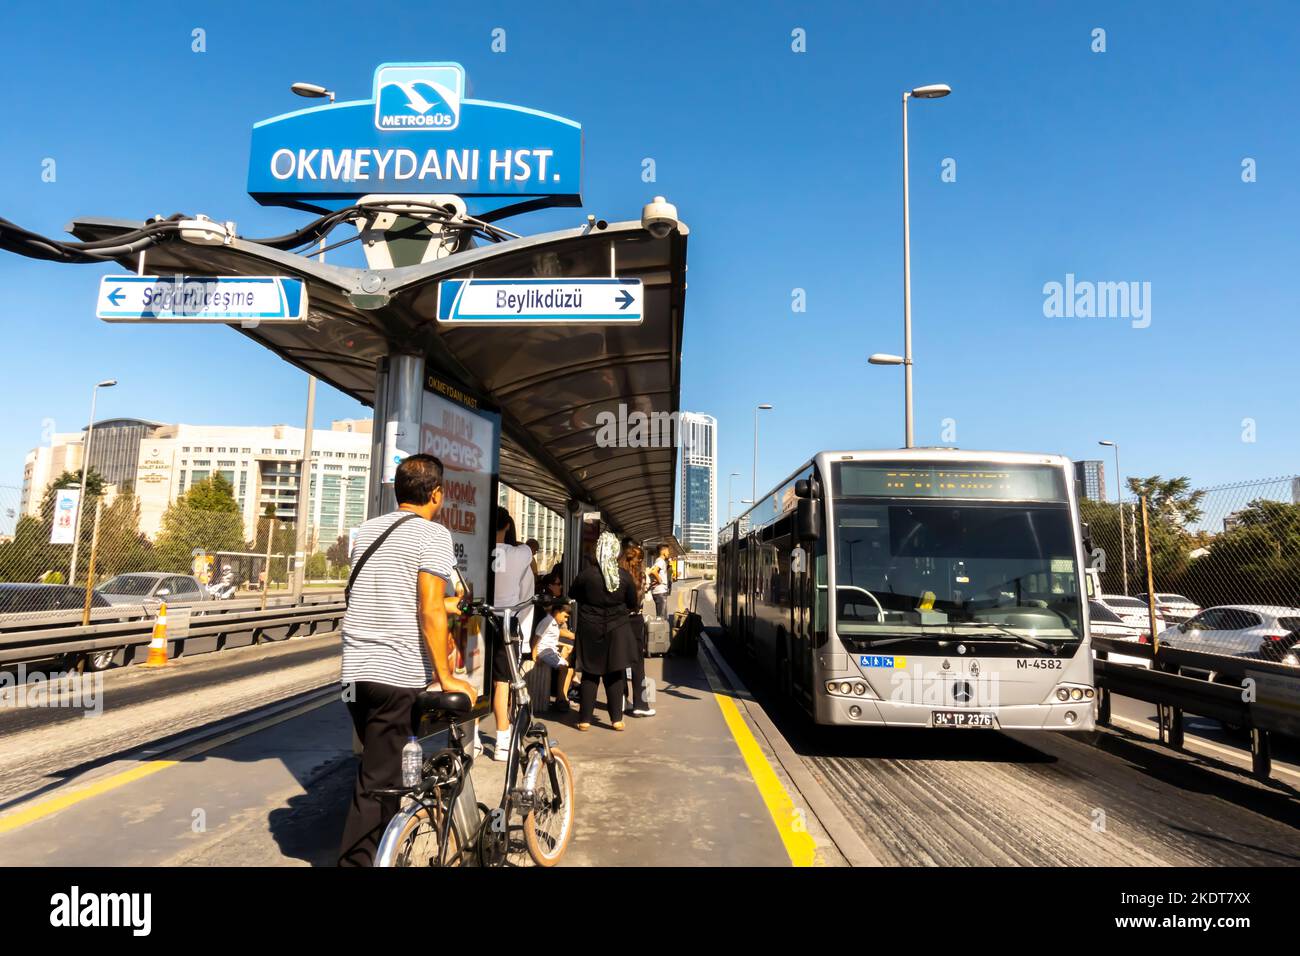 Istanbul public transportation. Metrobus Okmeidani high-speed bus stop in Sisli, istanbul, Turkey. Rapid transit system. Stock Photo